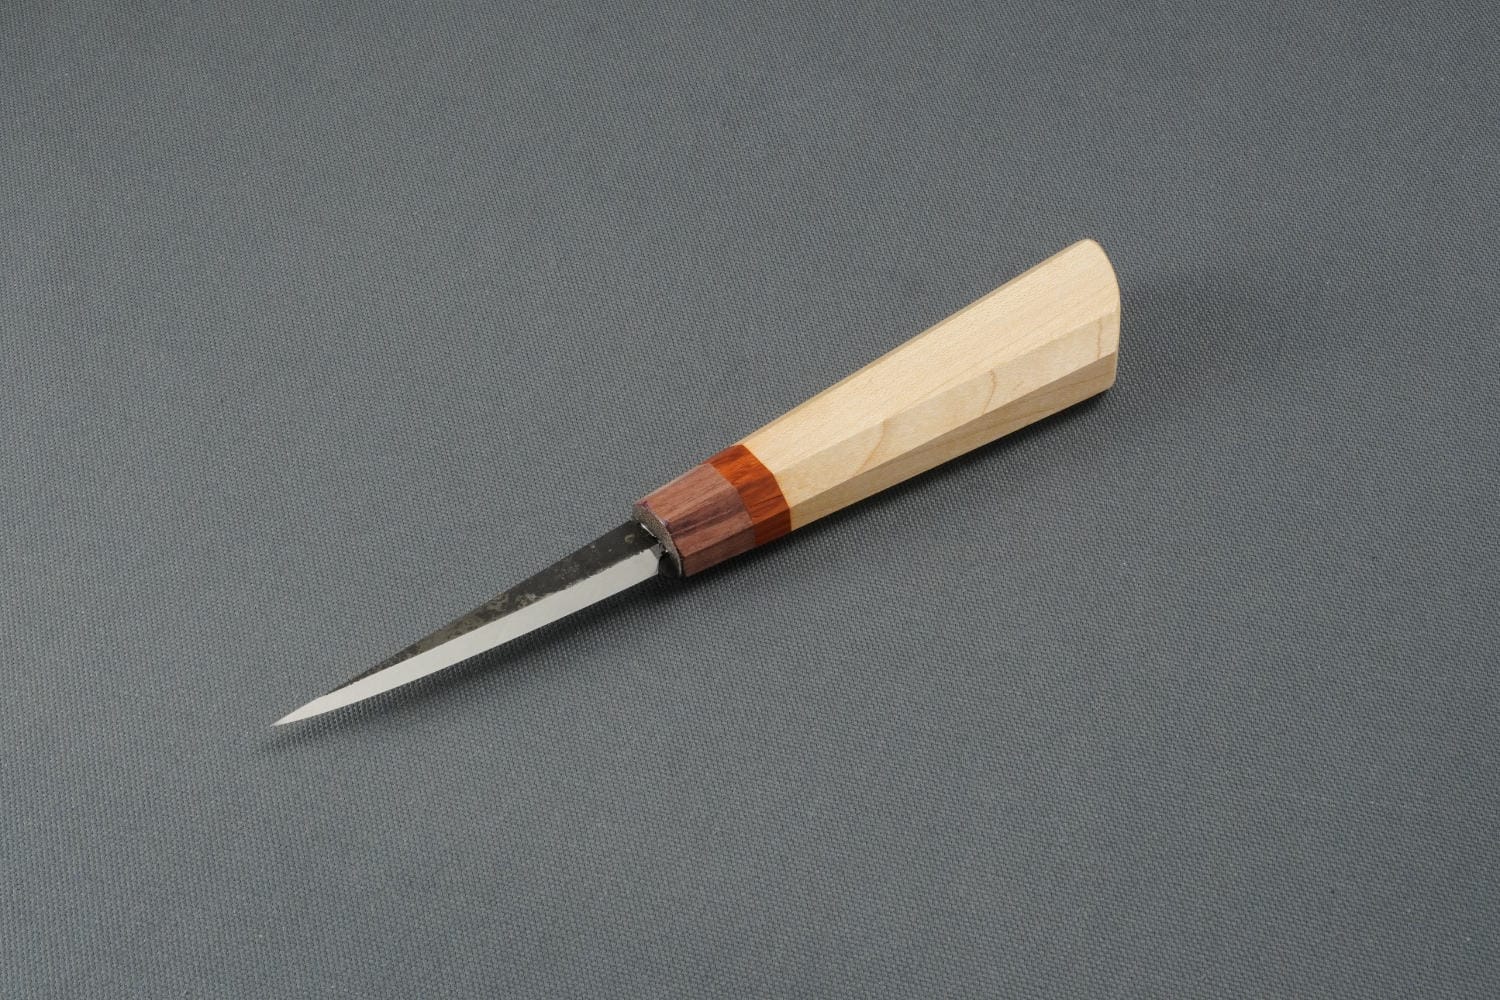 Slöjd Knife - Wood Carving Knife - 90 mm - The Spoon Crank